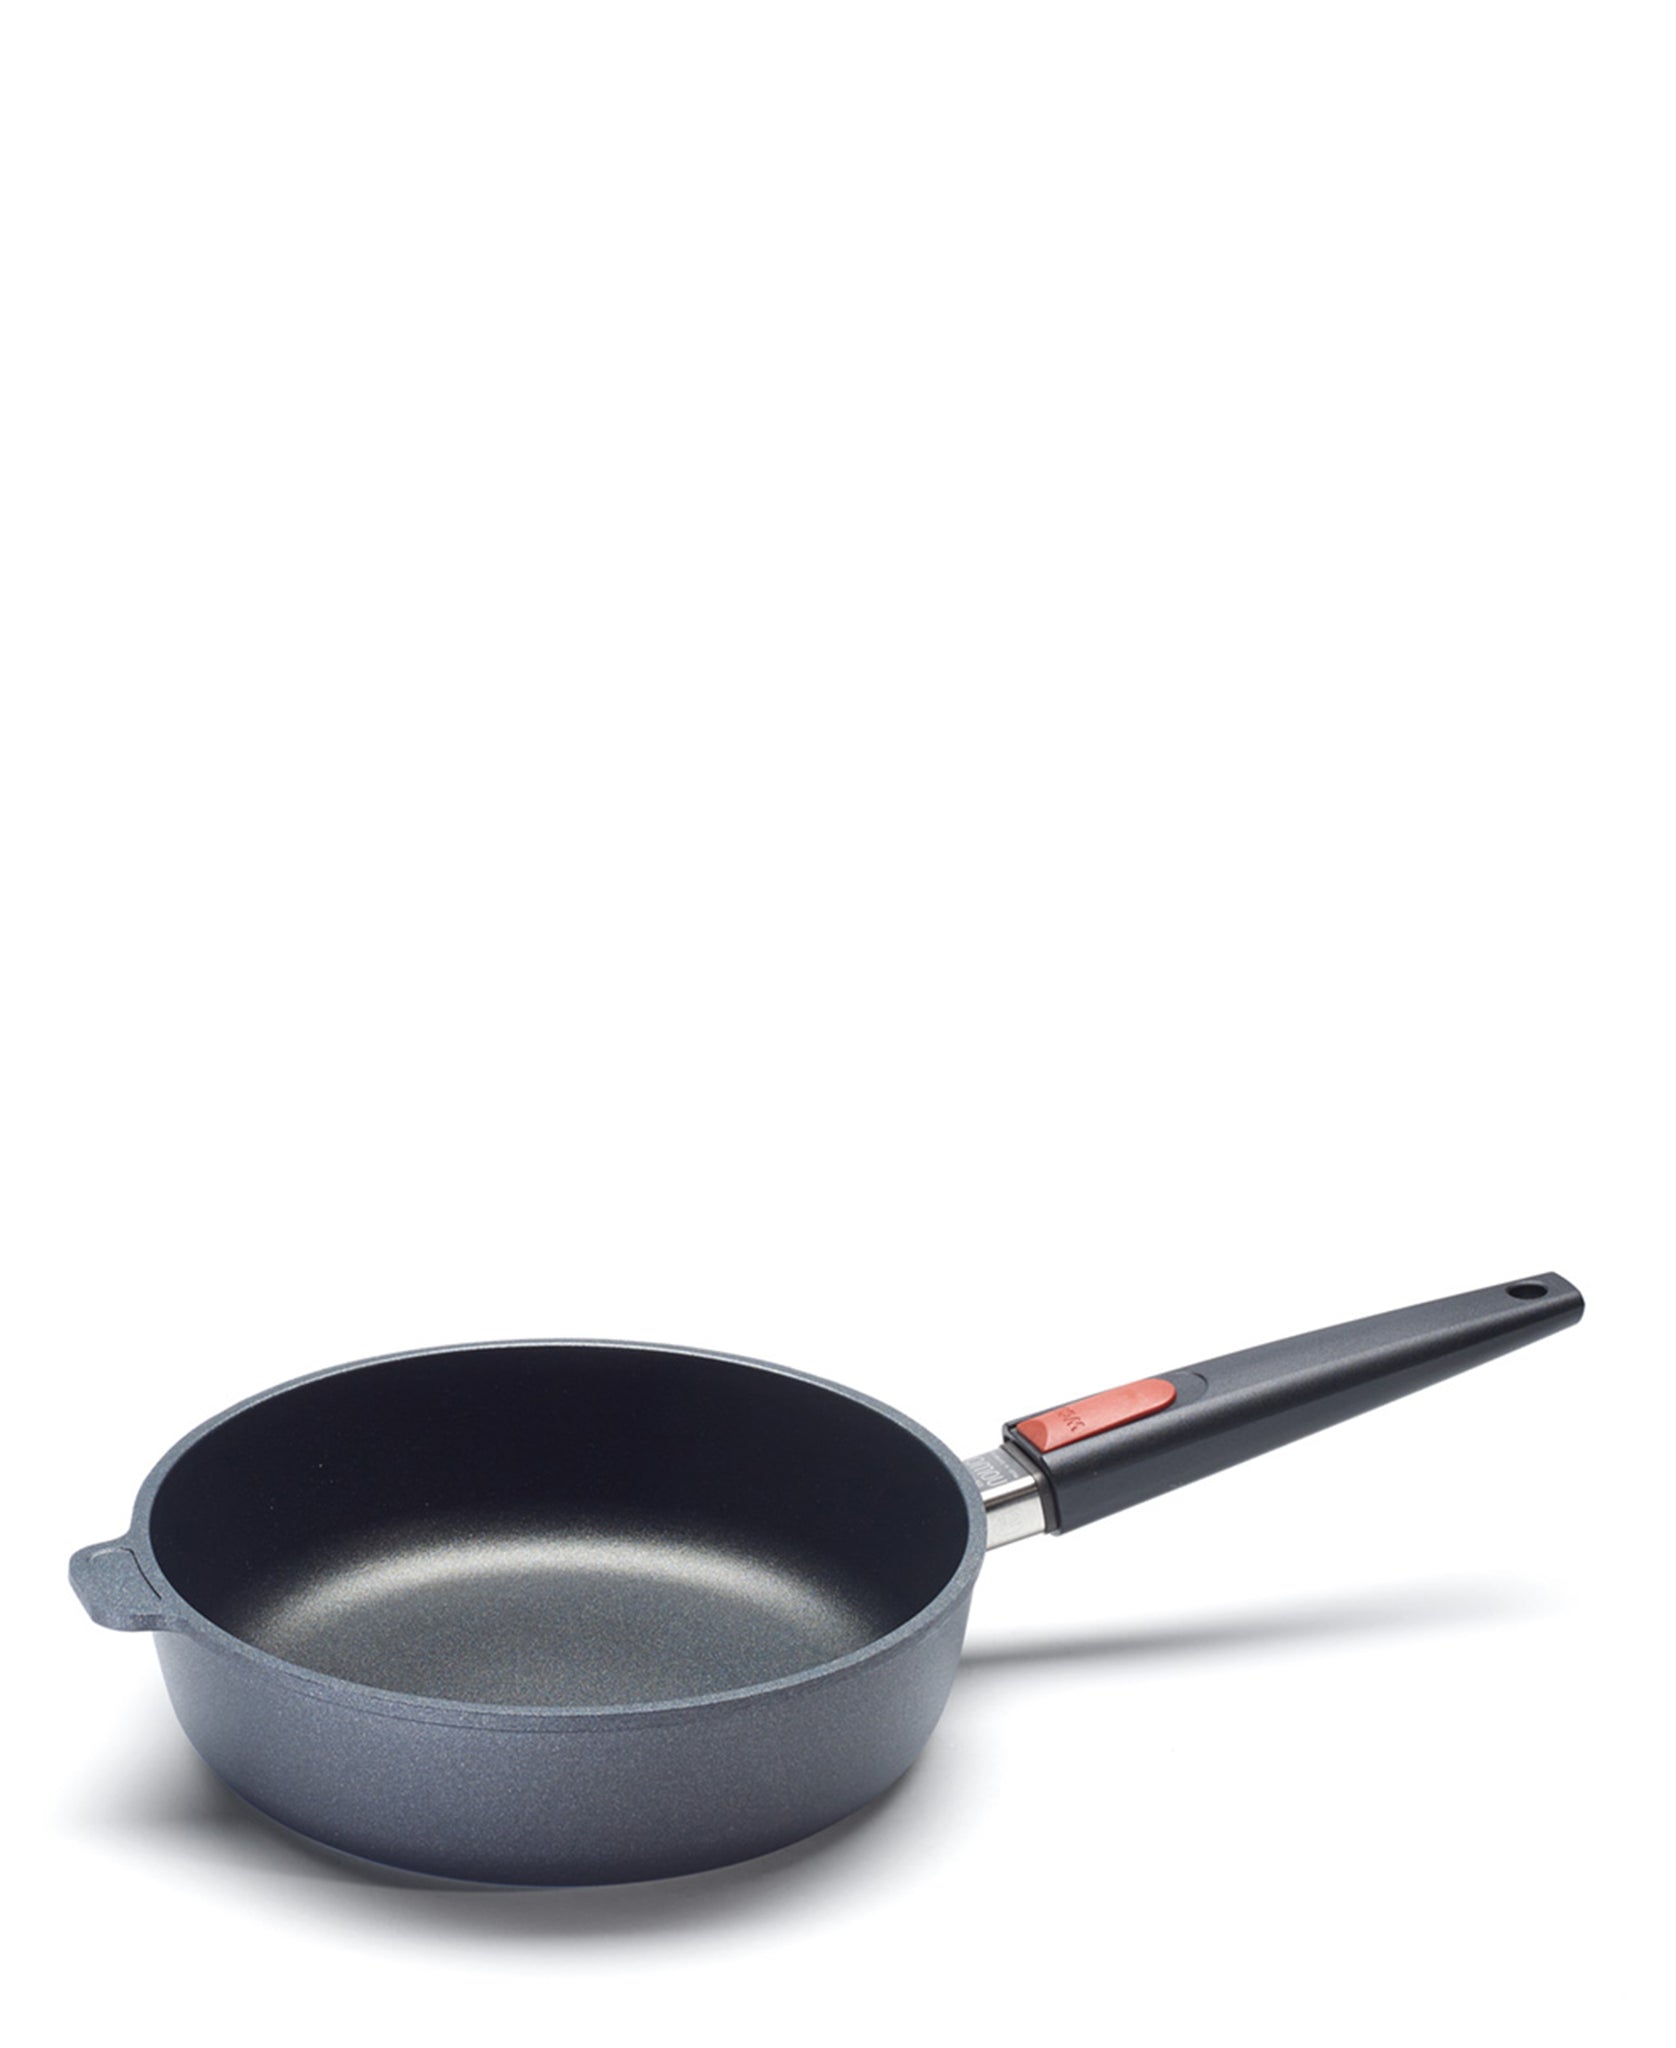 Woll Nowo 28 cm Saute Pan with Detachable Handle